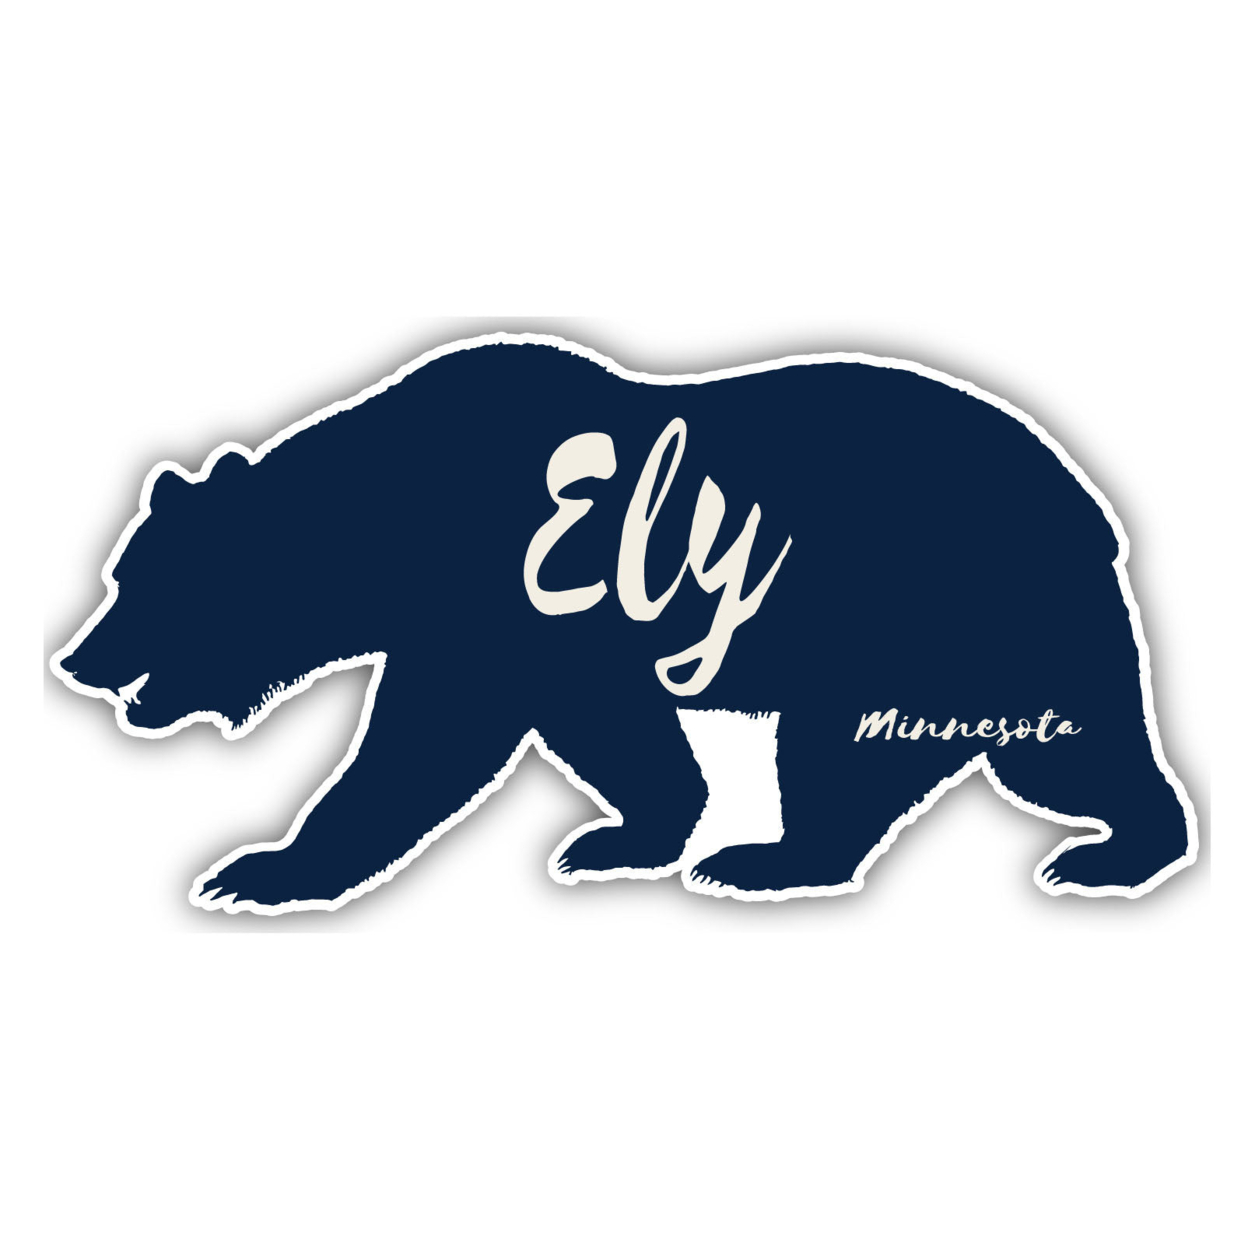 Ely Minnesota Souvenir Decorative Stickers (Choose Theme And Size) - Single Unit, 10-Inch, Bear